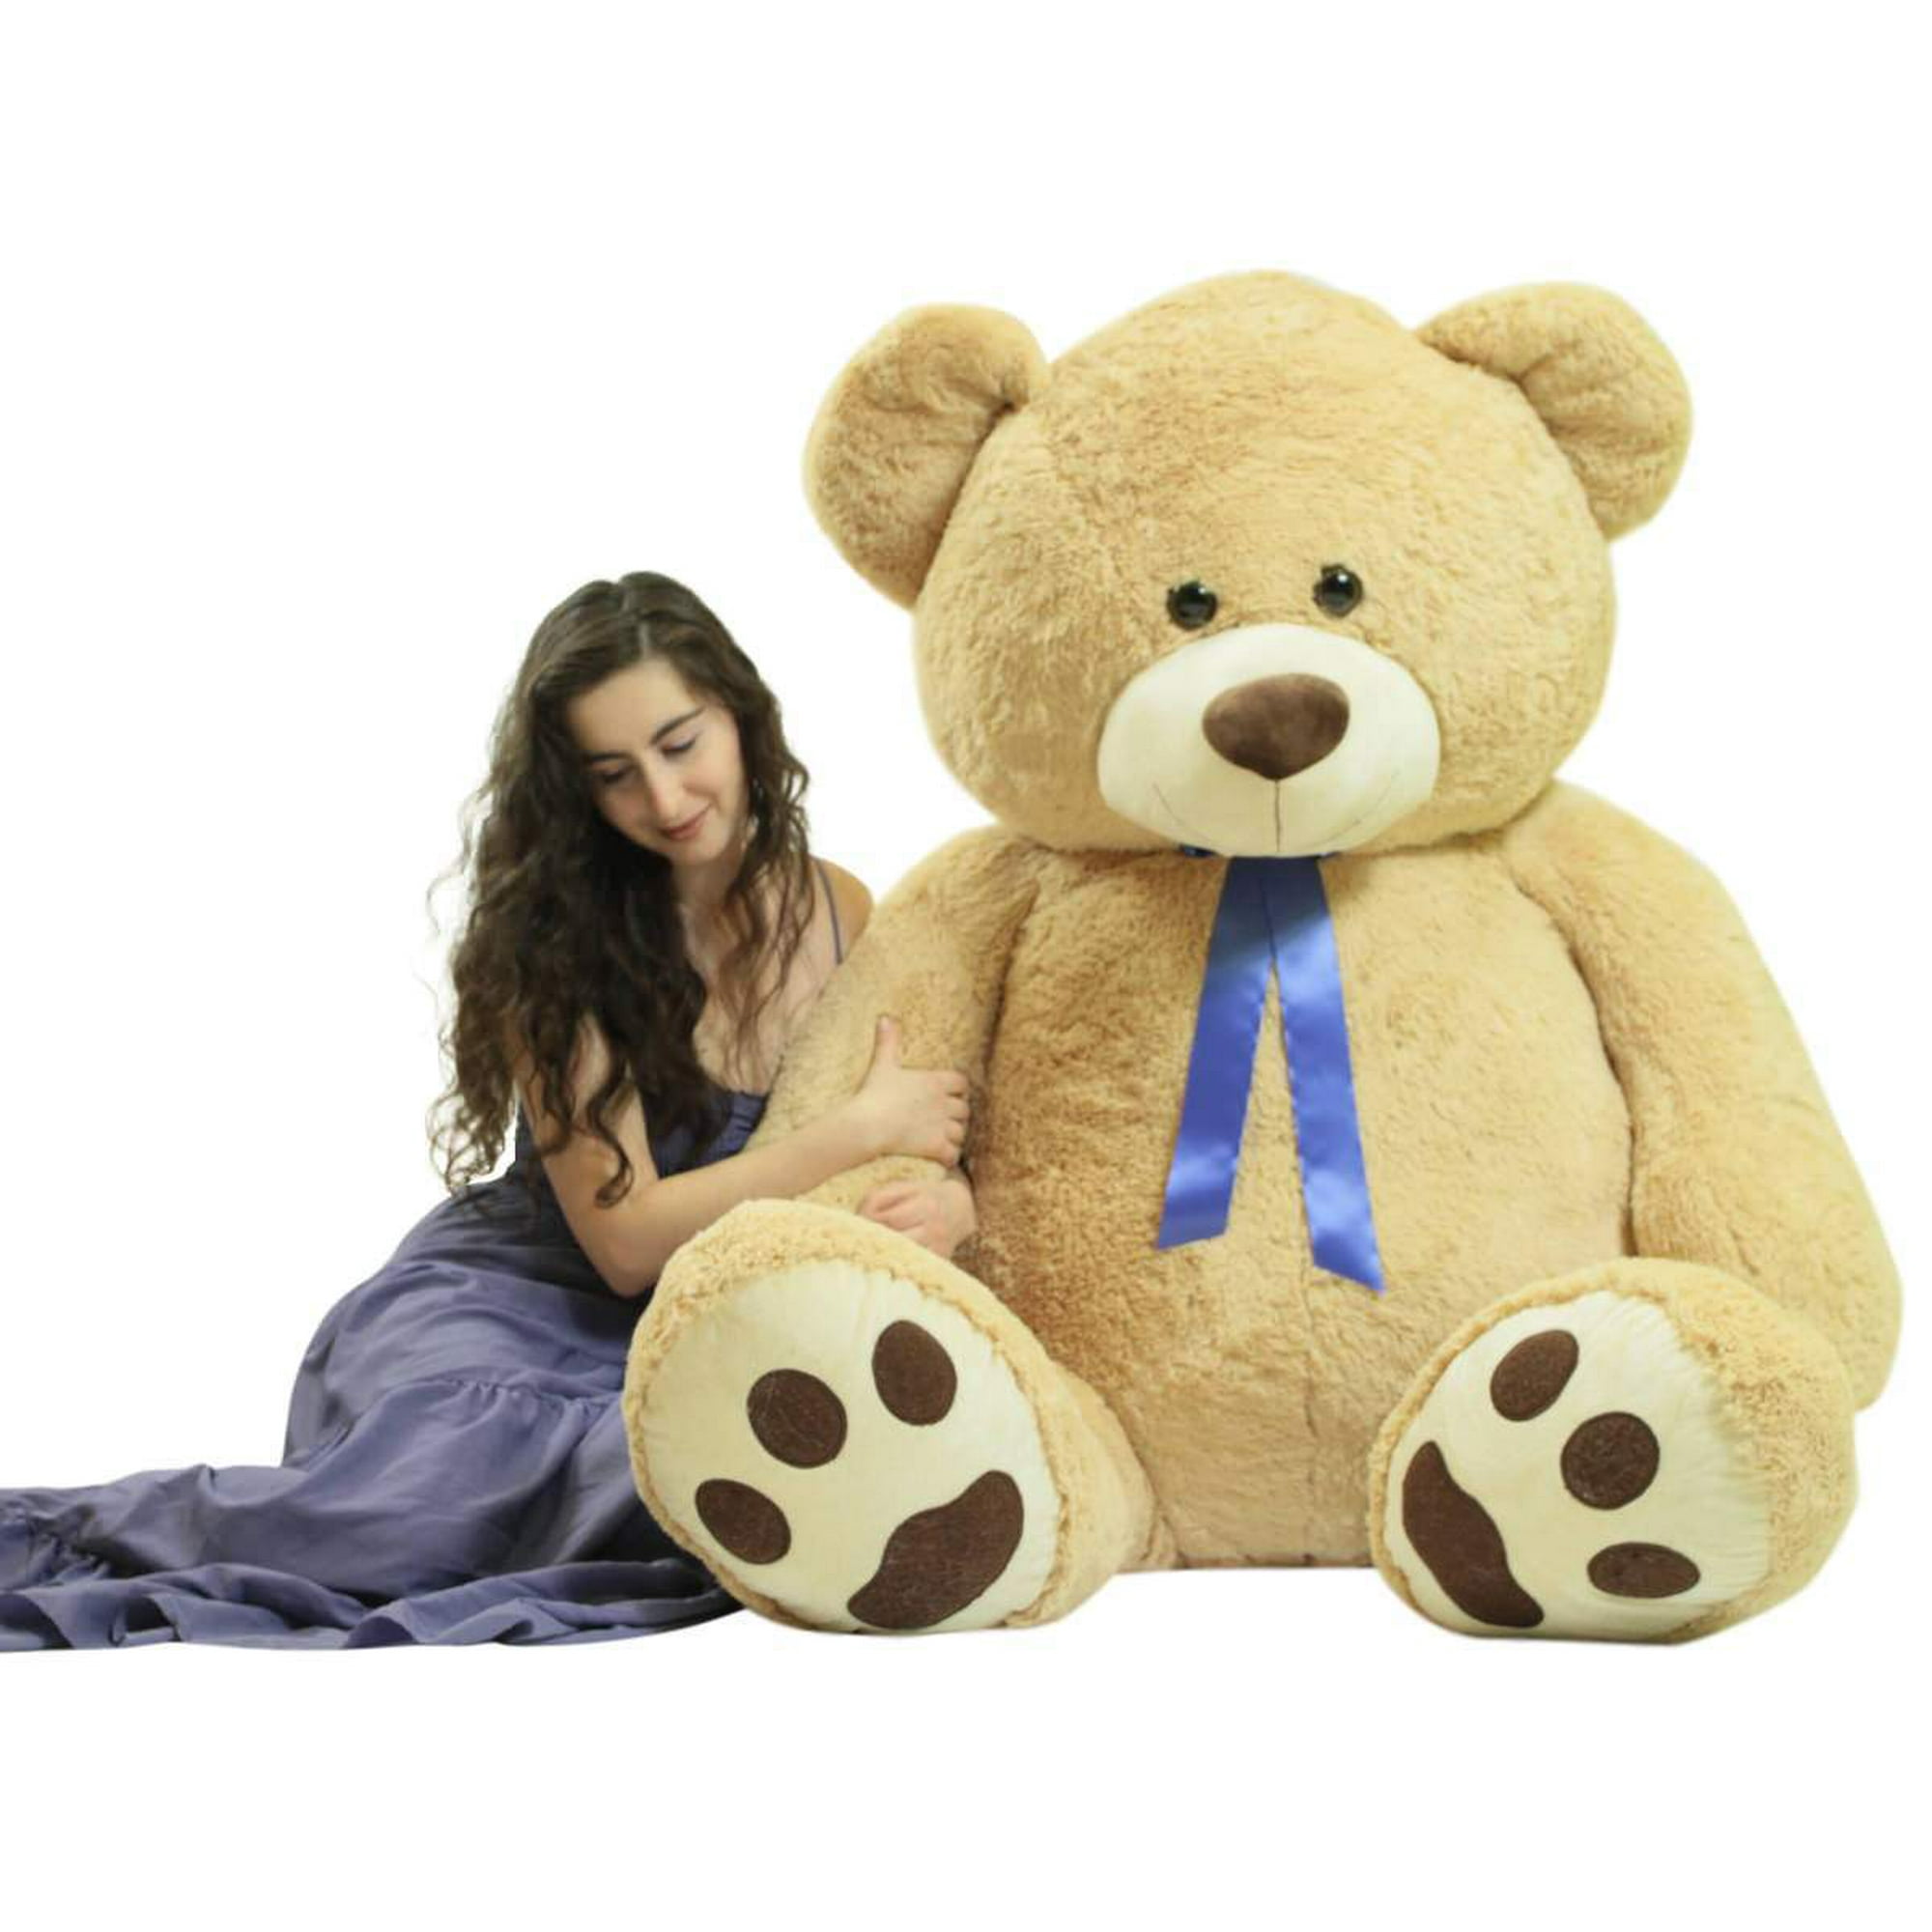 6 Foot Teddy Bear Soft Giant Stuffed Animal Beige Color, Stuffed by Hand in  USA | Walmart Canada